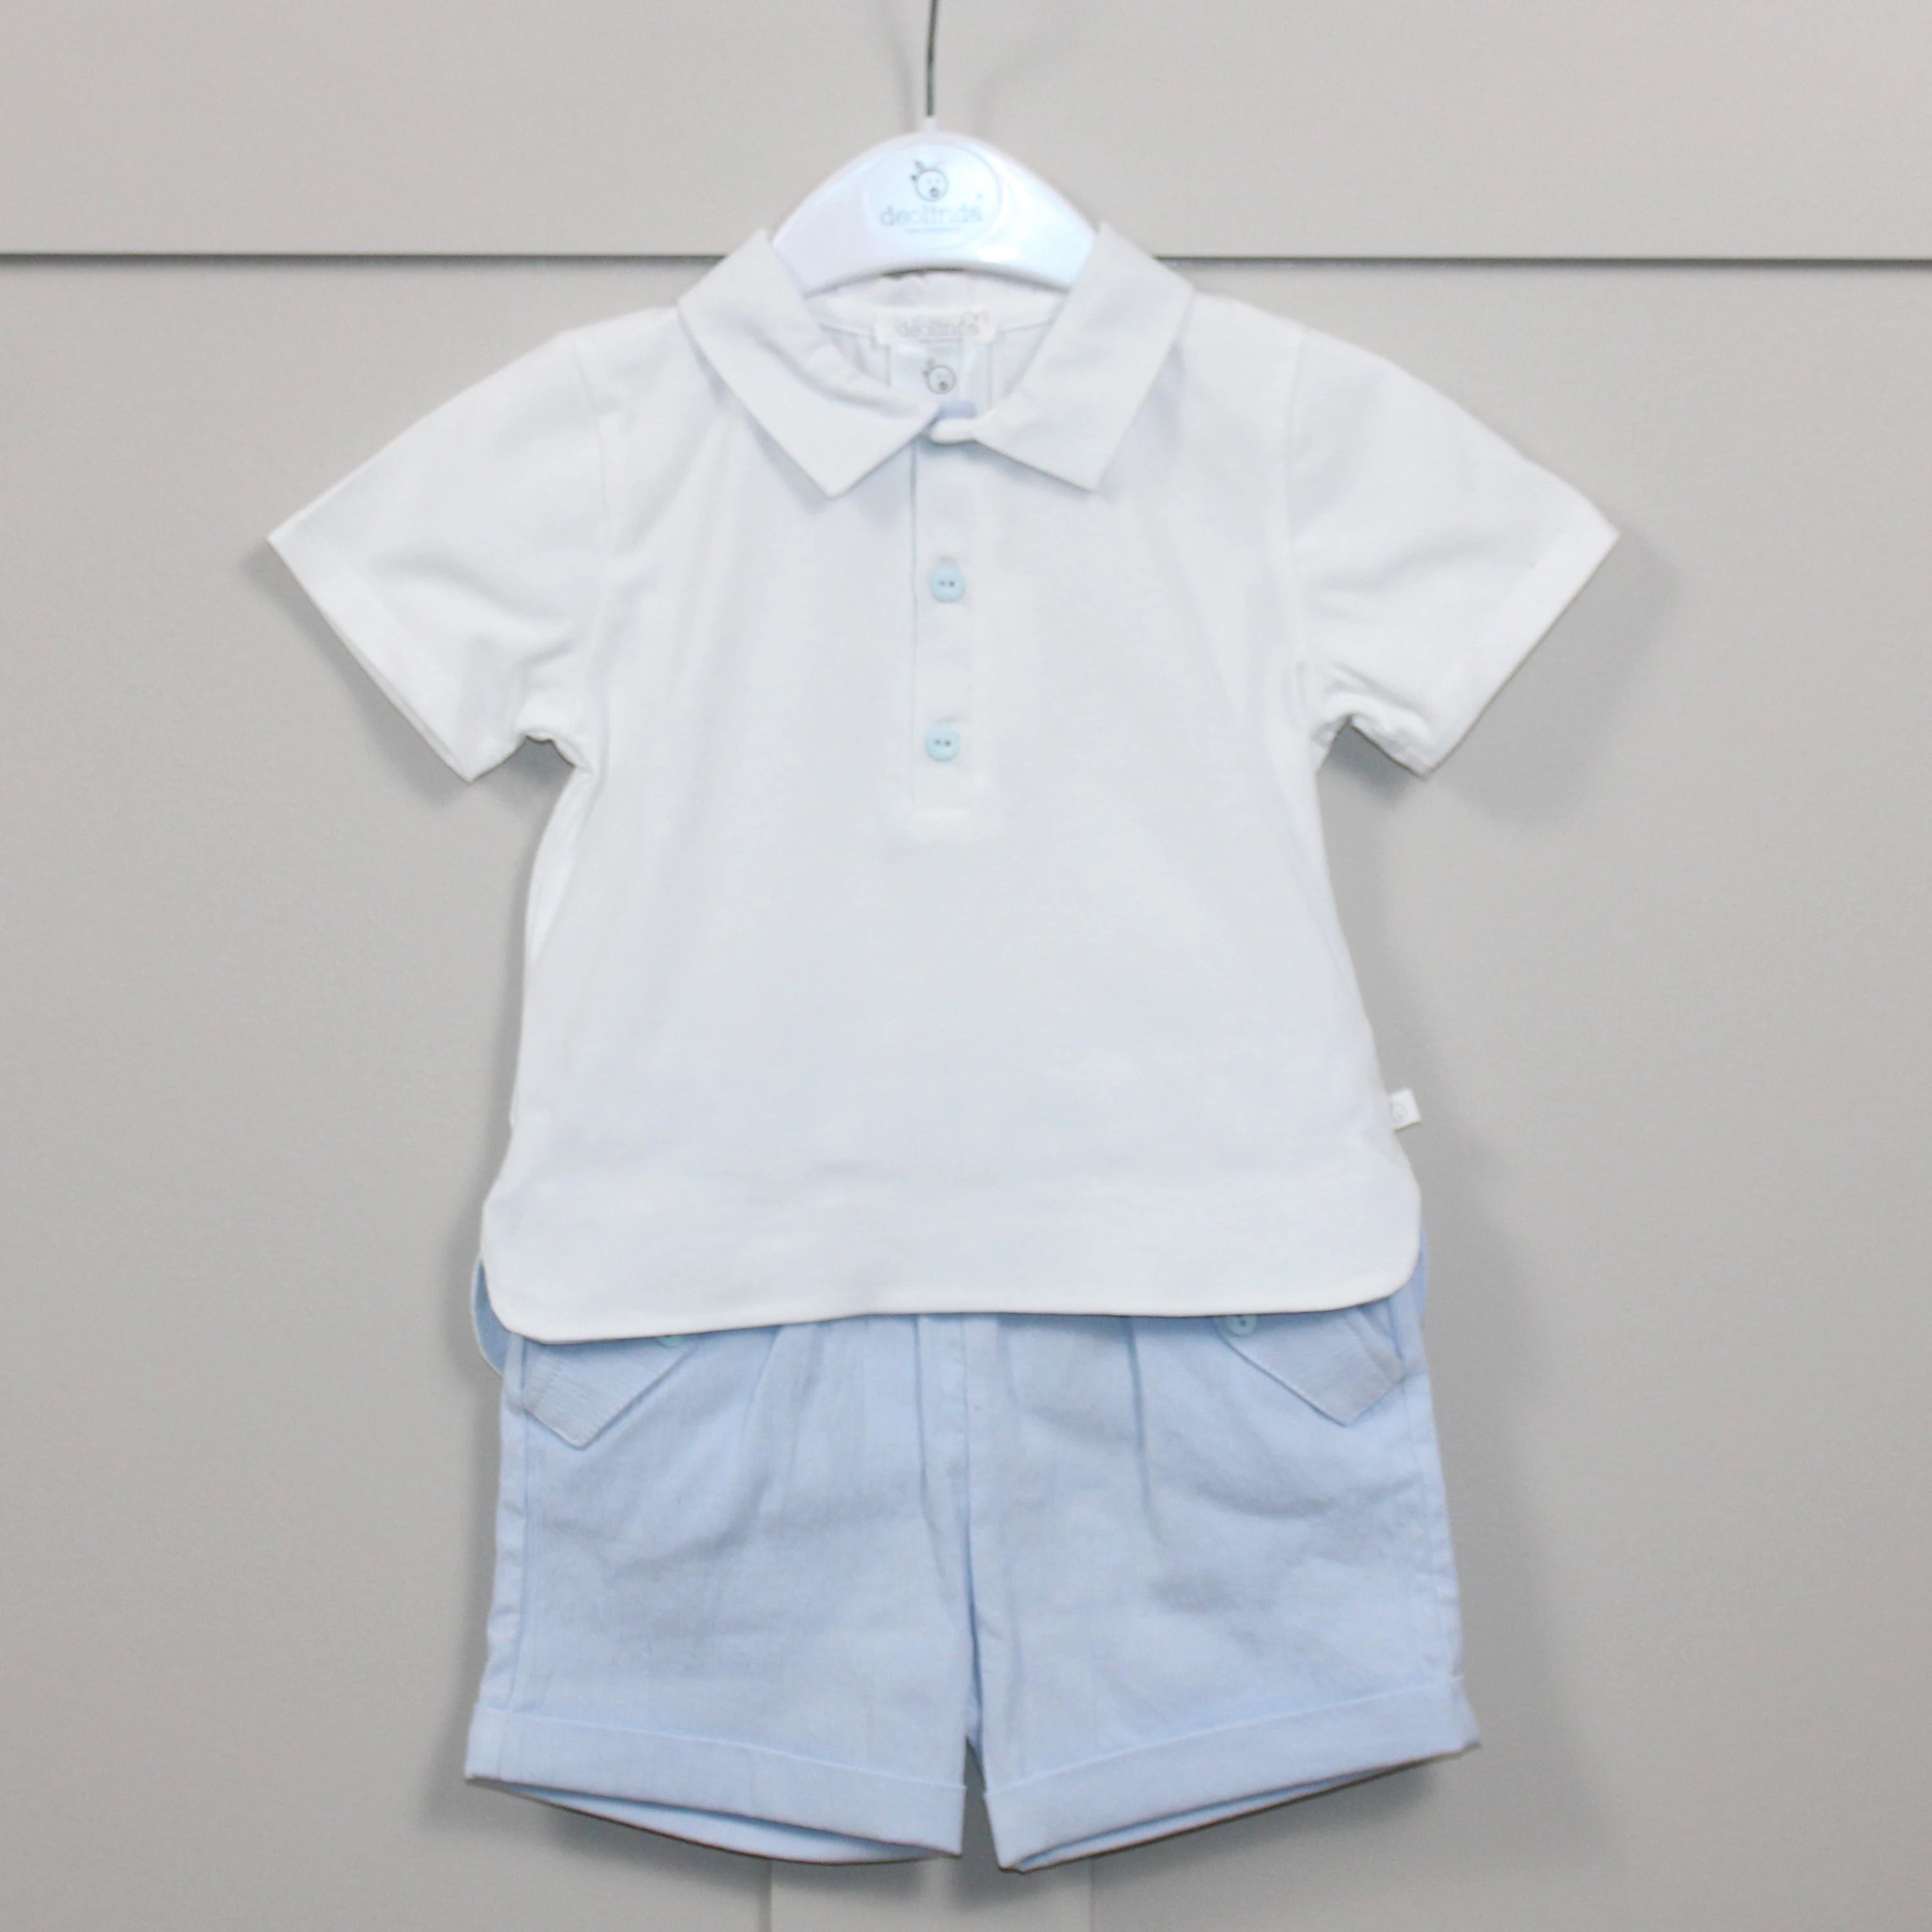 deolinda "Lucas" T-Shirt and Shorts